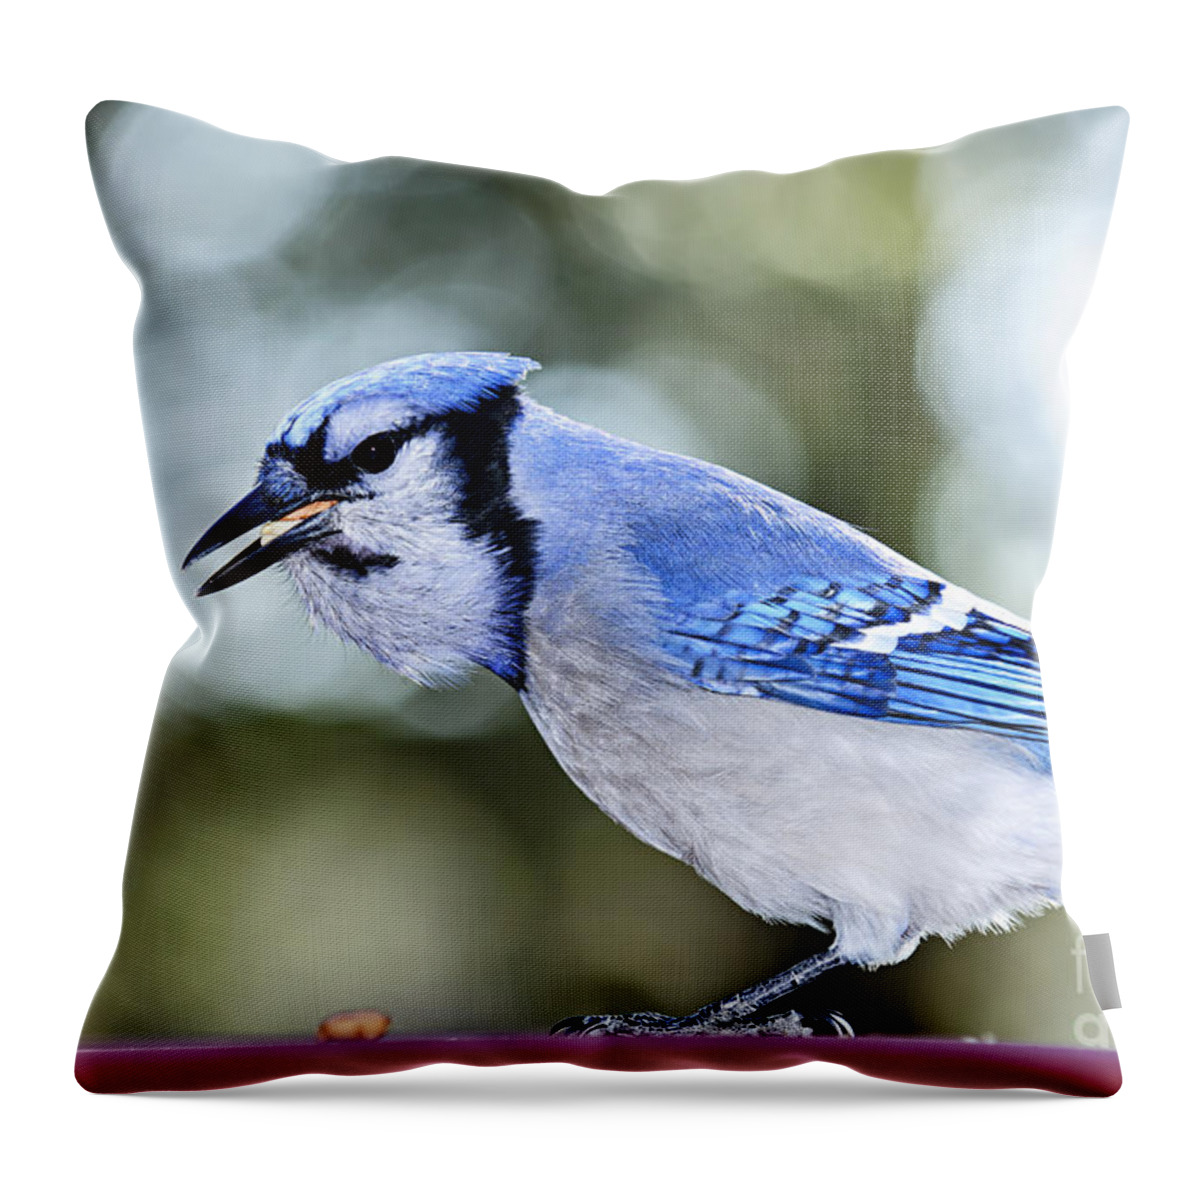 Bird Throw Pillow featuring the photograph Blue jay bird by Elena Elisseeva